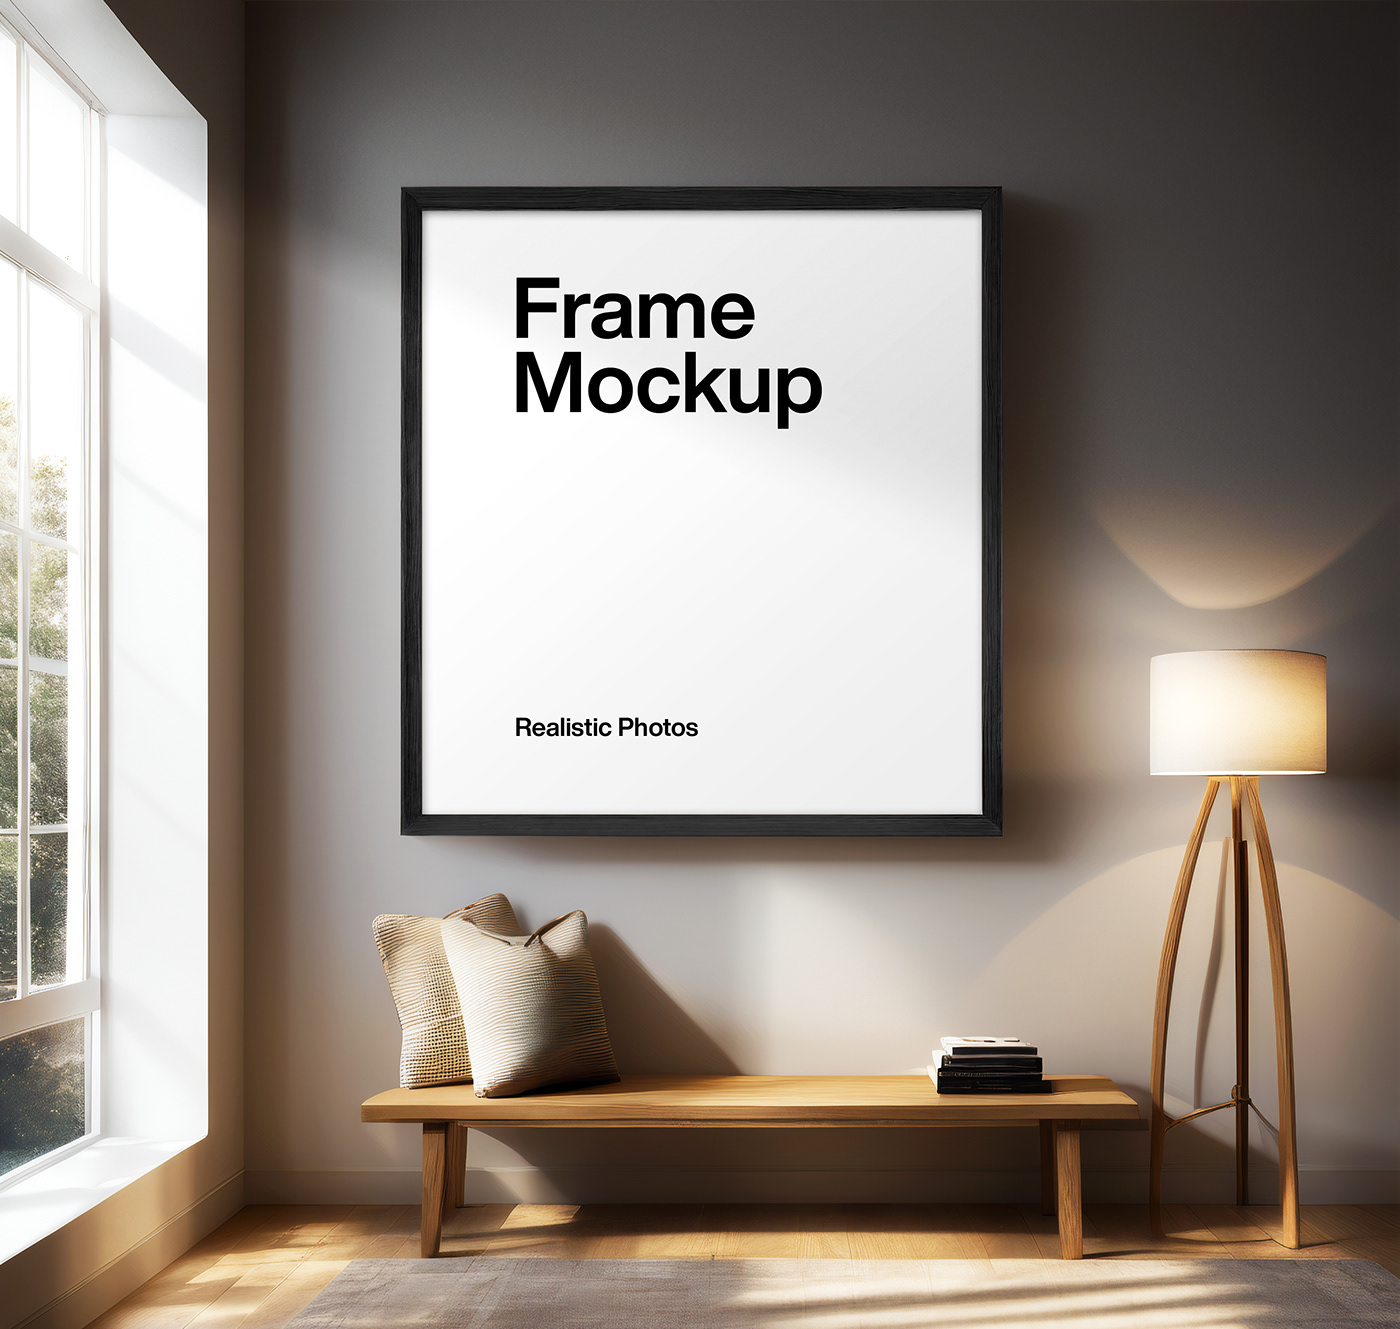 Mockup free download frame mockup Poster Mockup mockups free photoshop Photoshop Templates template presentation